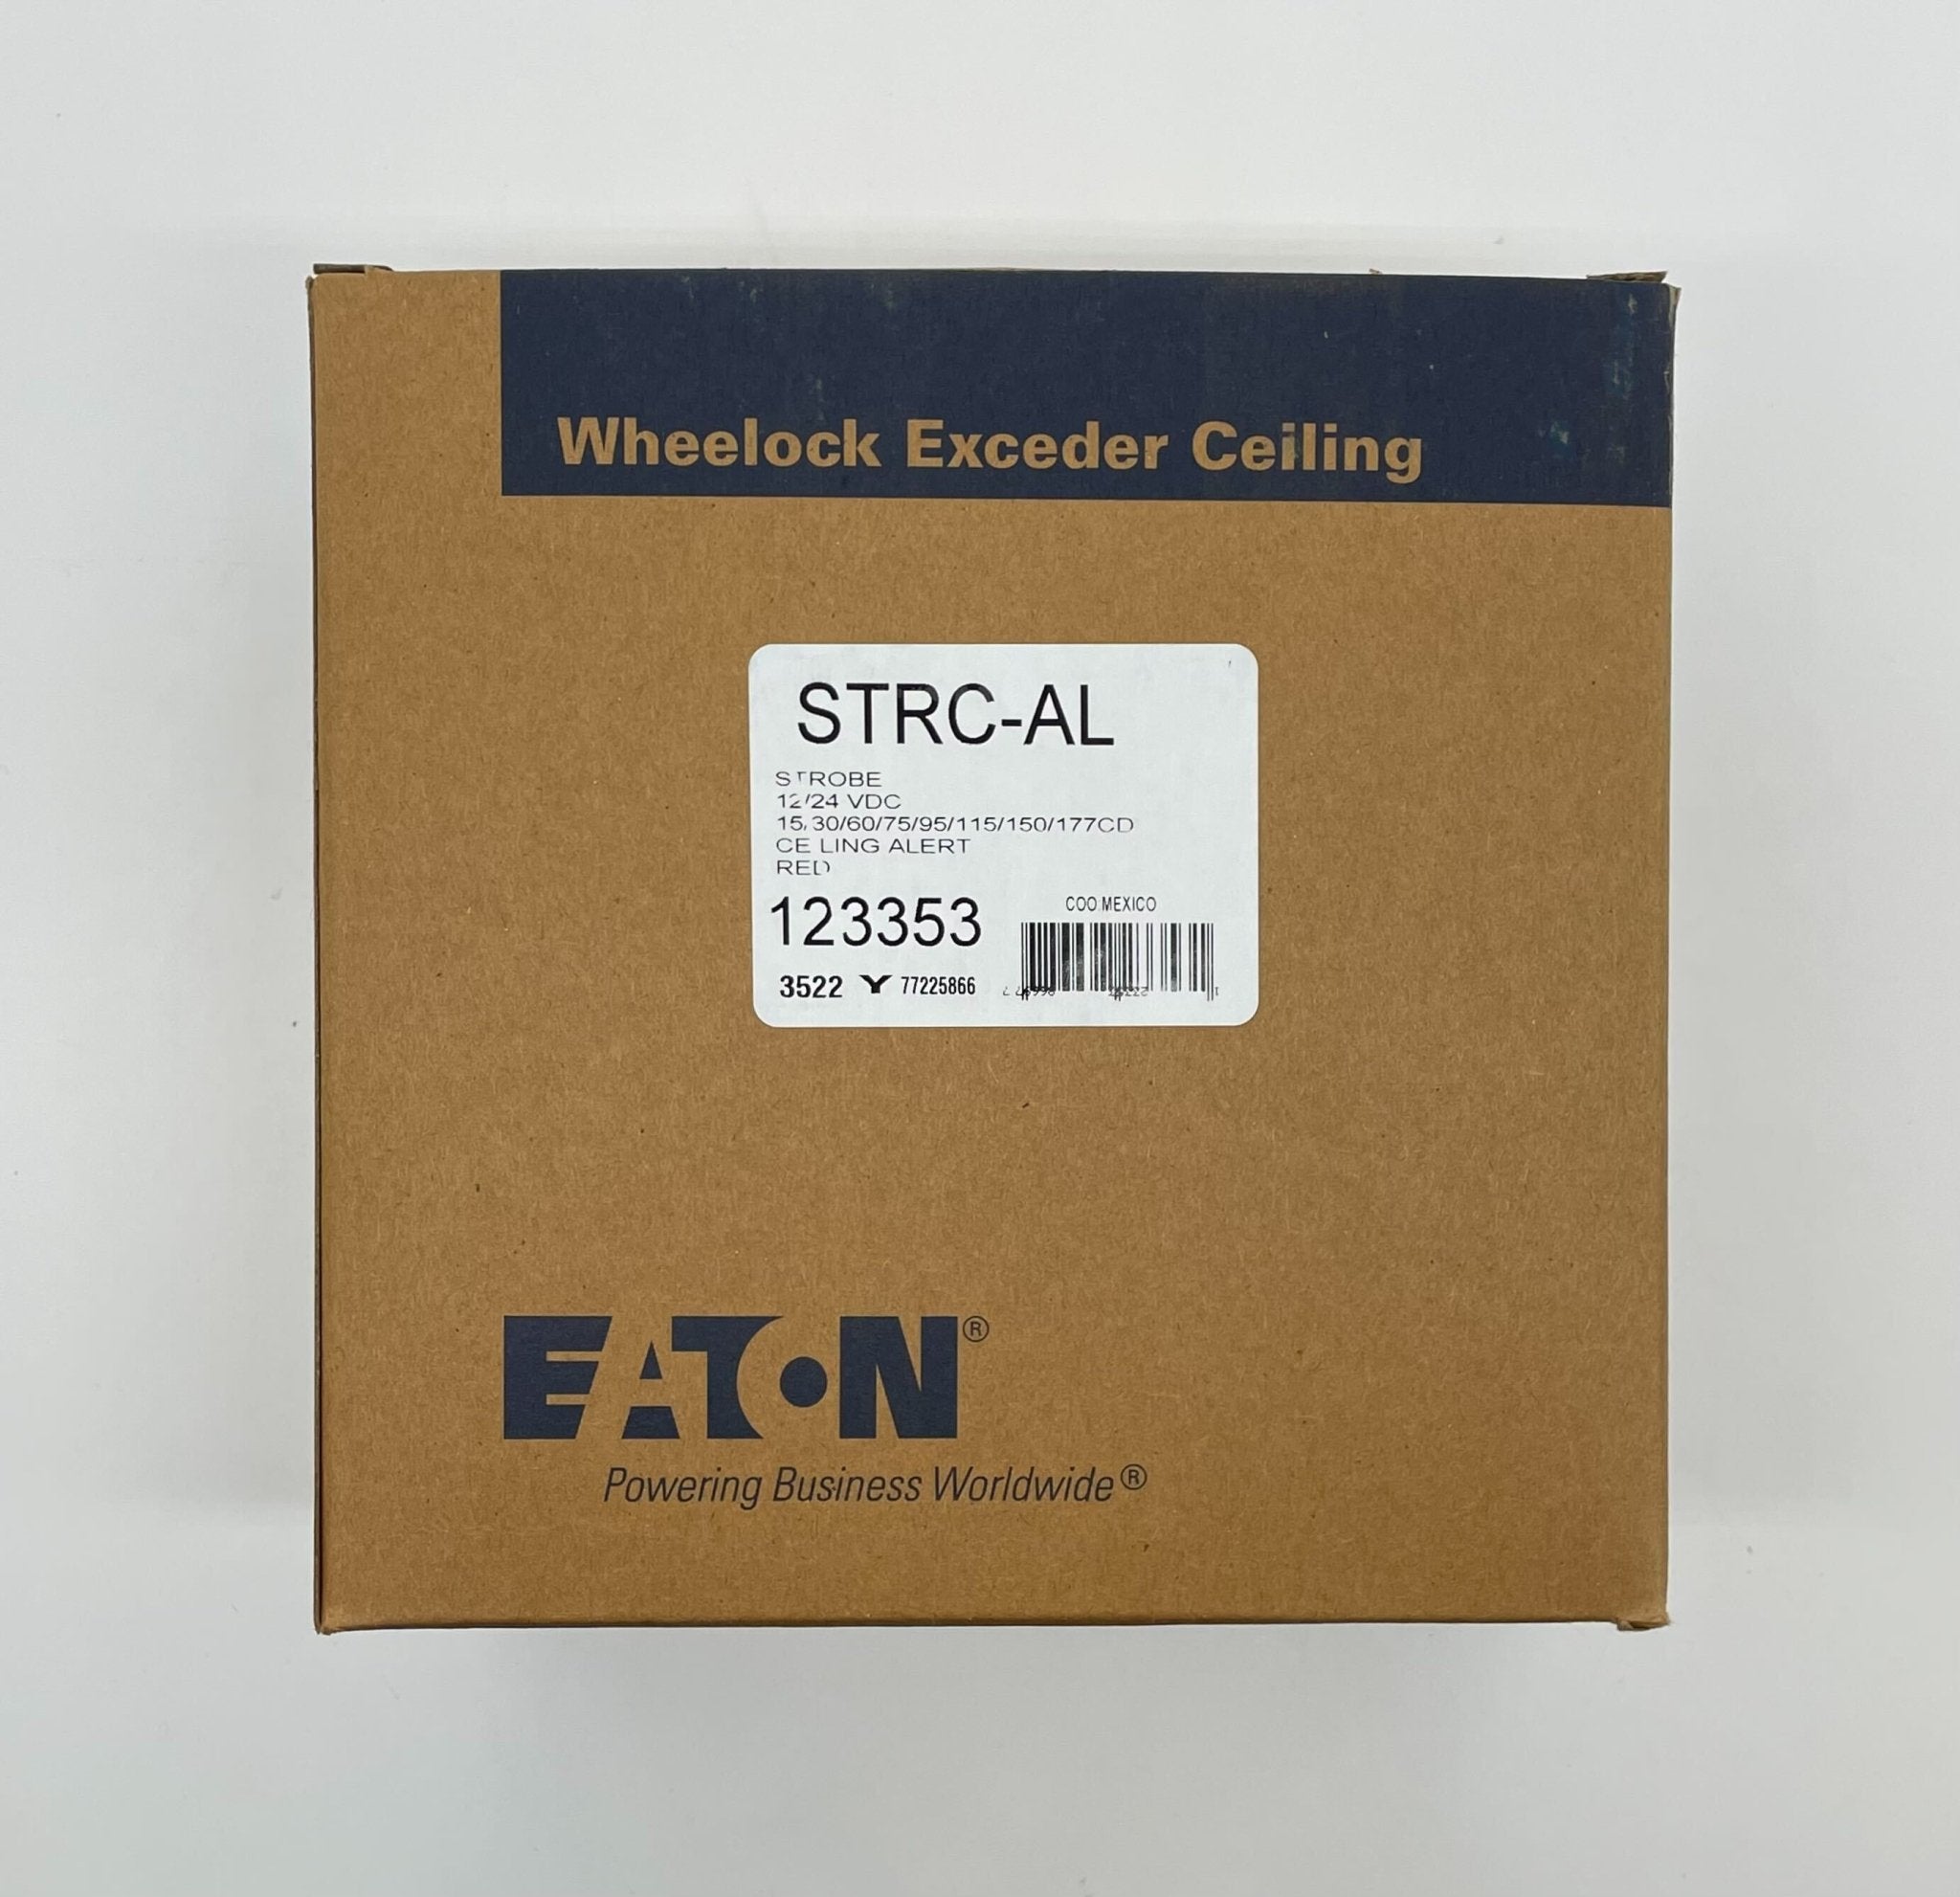 Wheelock STRC-AL - The Fire Alarm Supplier